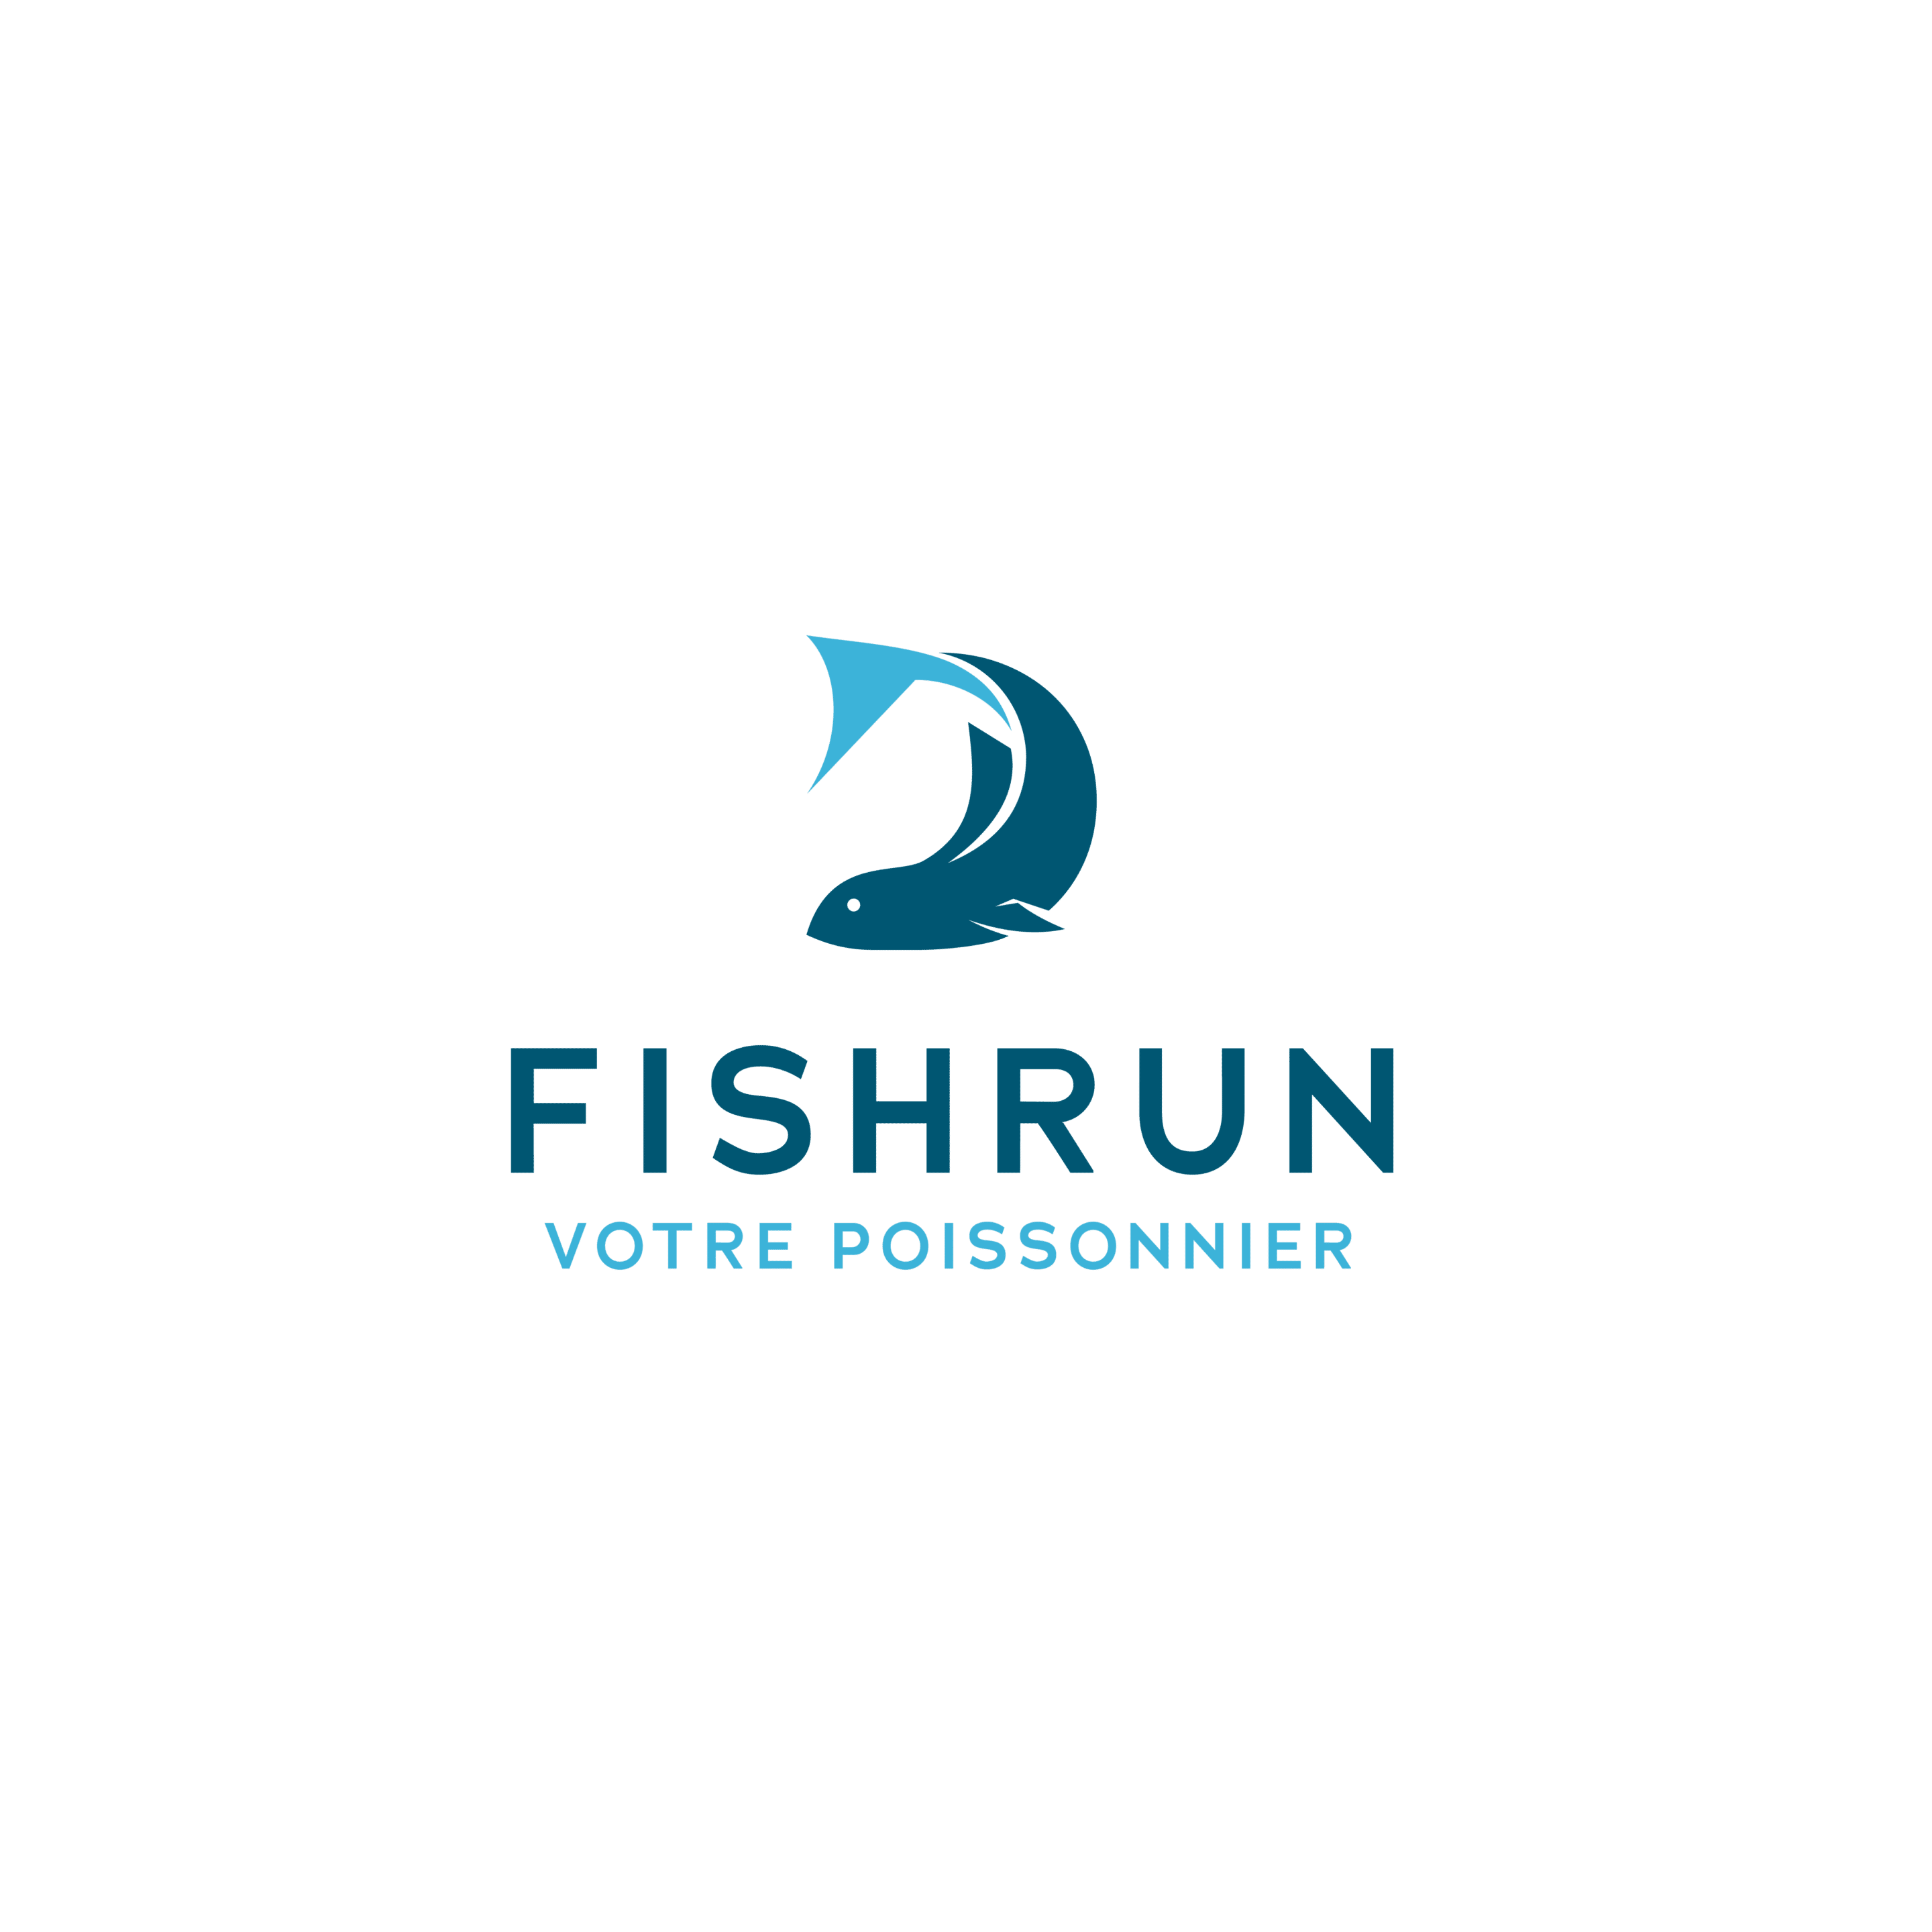 FishRun